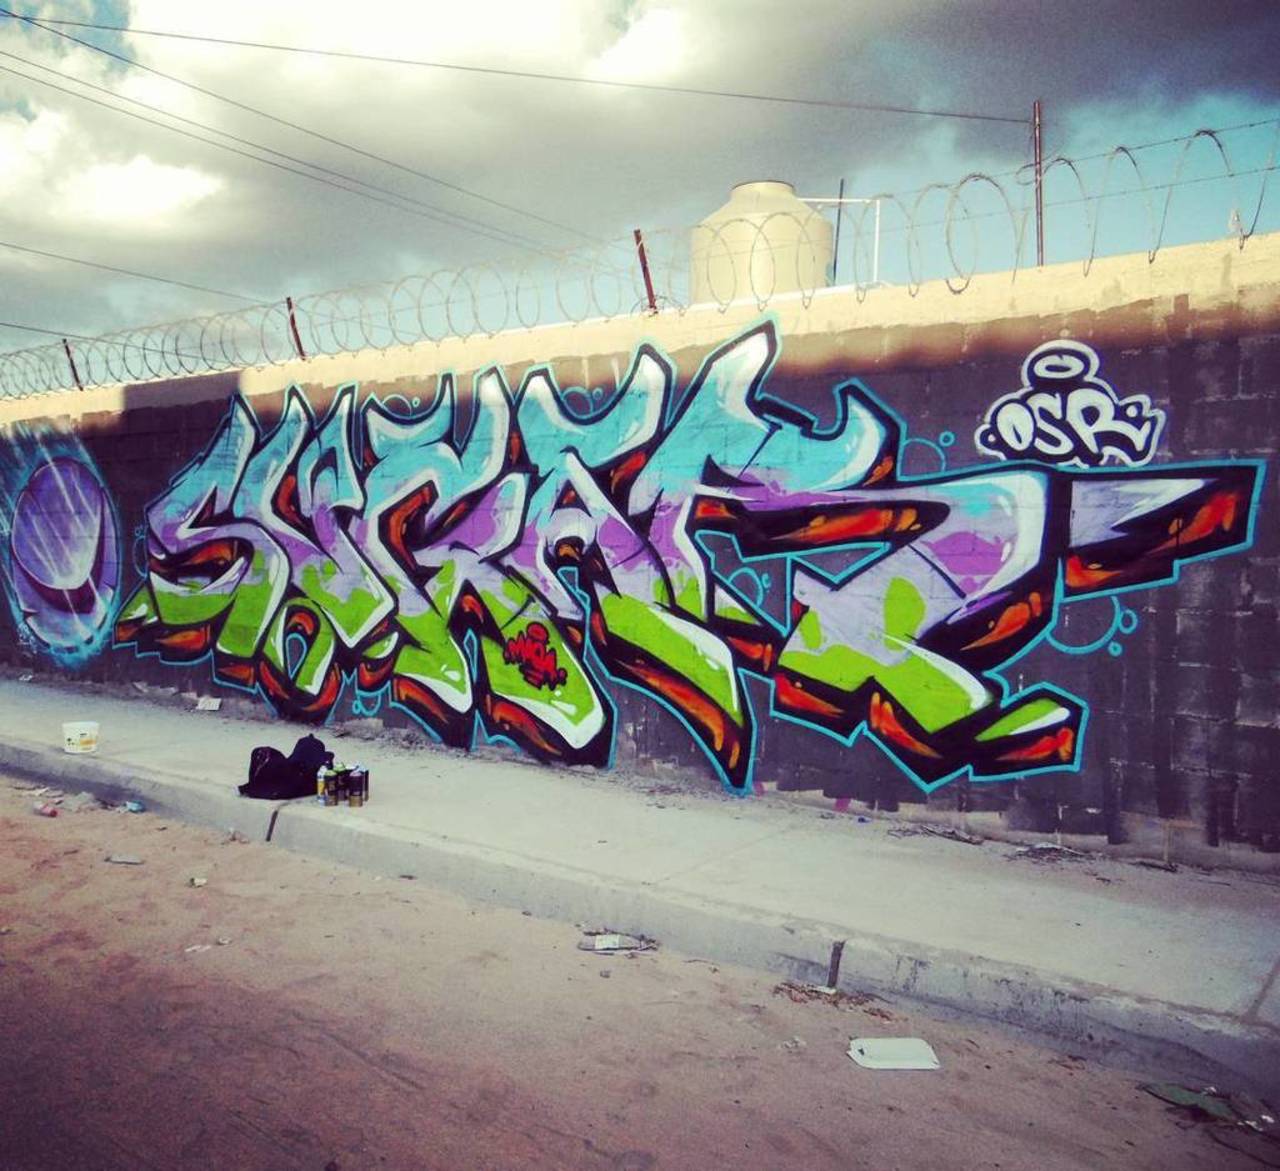 RT @artpushr: via #sugarosr "http://bit.ly/1FOAFl0" #graffiti #streetart http://t.co/c9XAyrVtTy